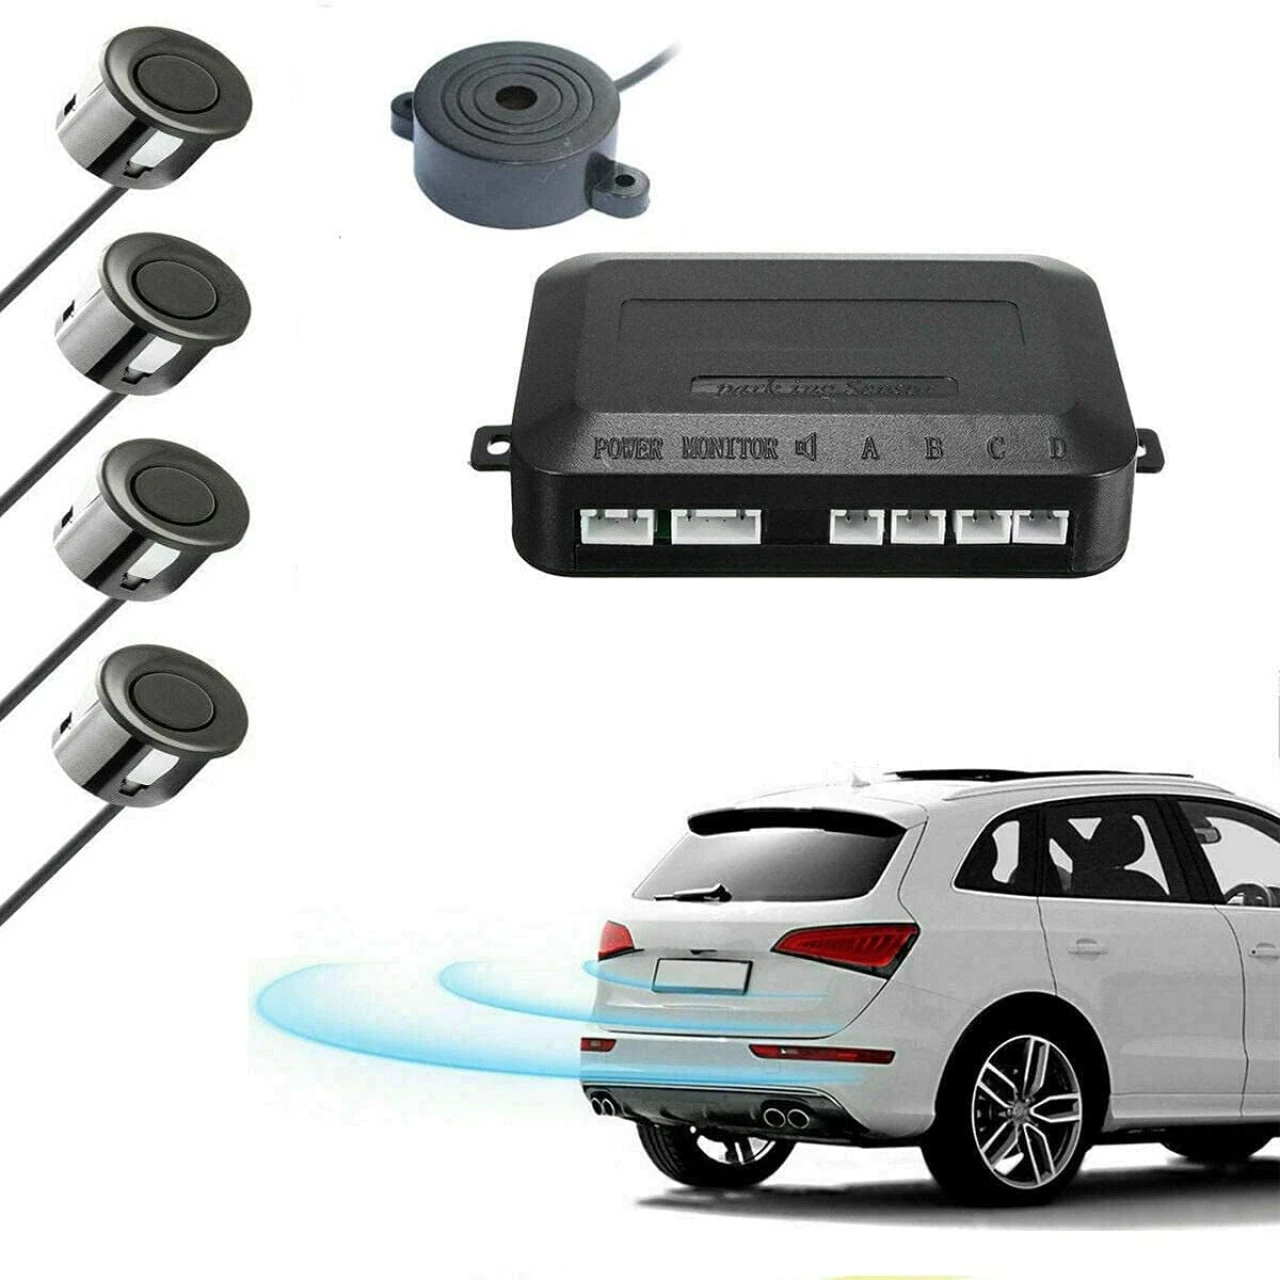 TOTMOX Car Auto Vehicle Reverse Backup Radar System, Reversing Radar Detector 4 Reversing Parking Sensors Beep Alarm